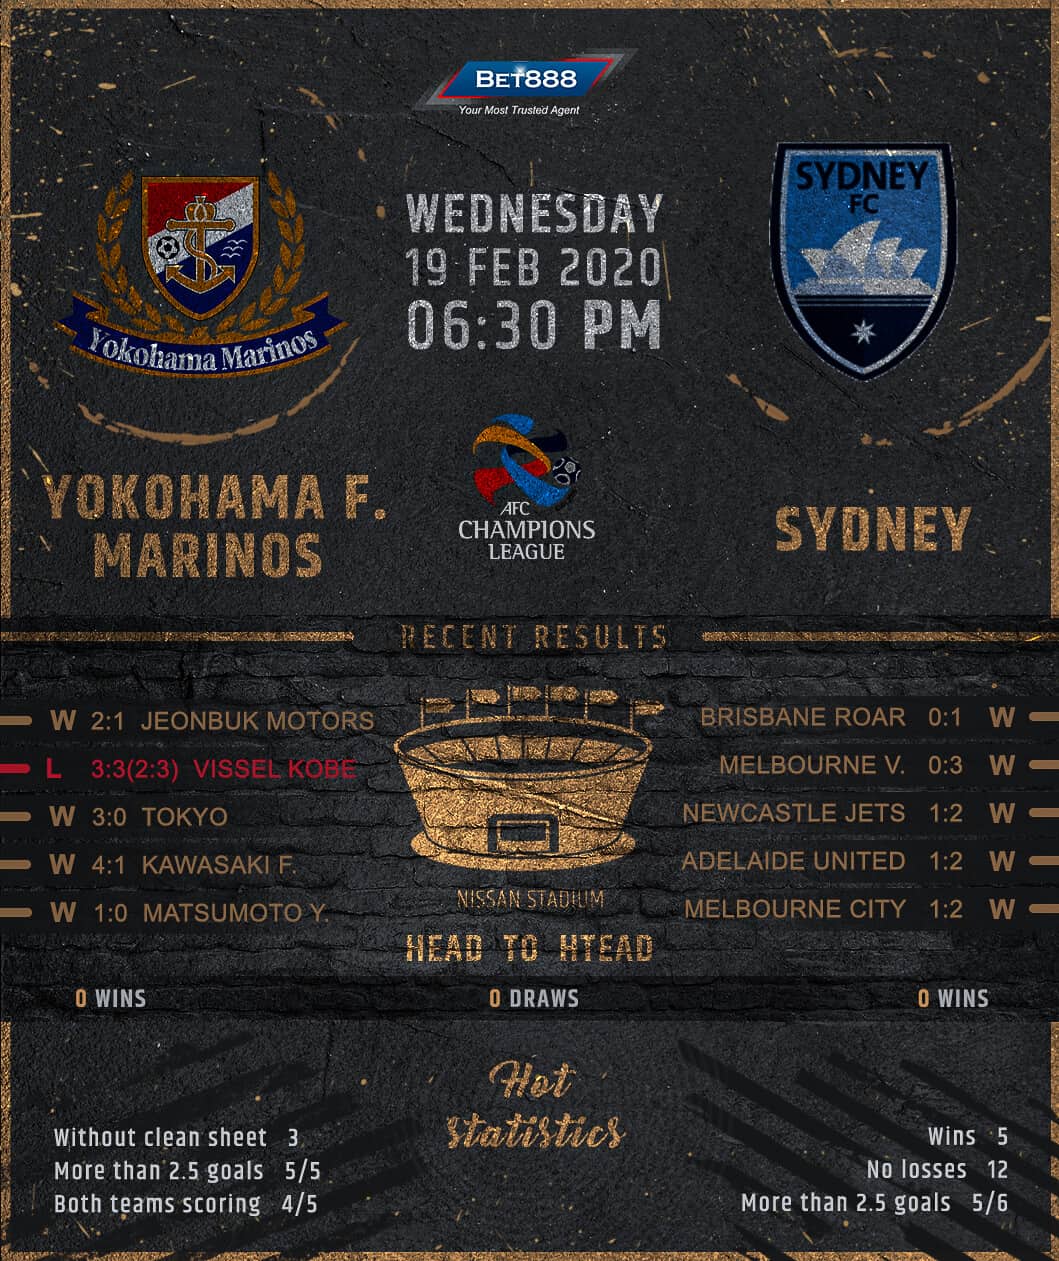 Yokohama F. Marinos vs Sydney﻿ 19/02/20